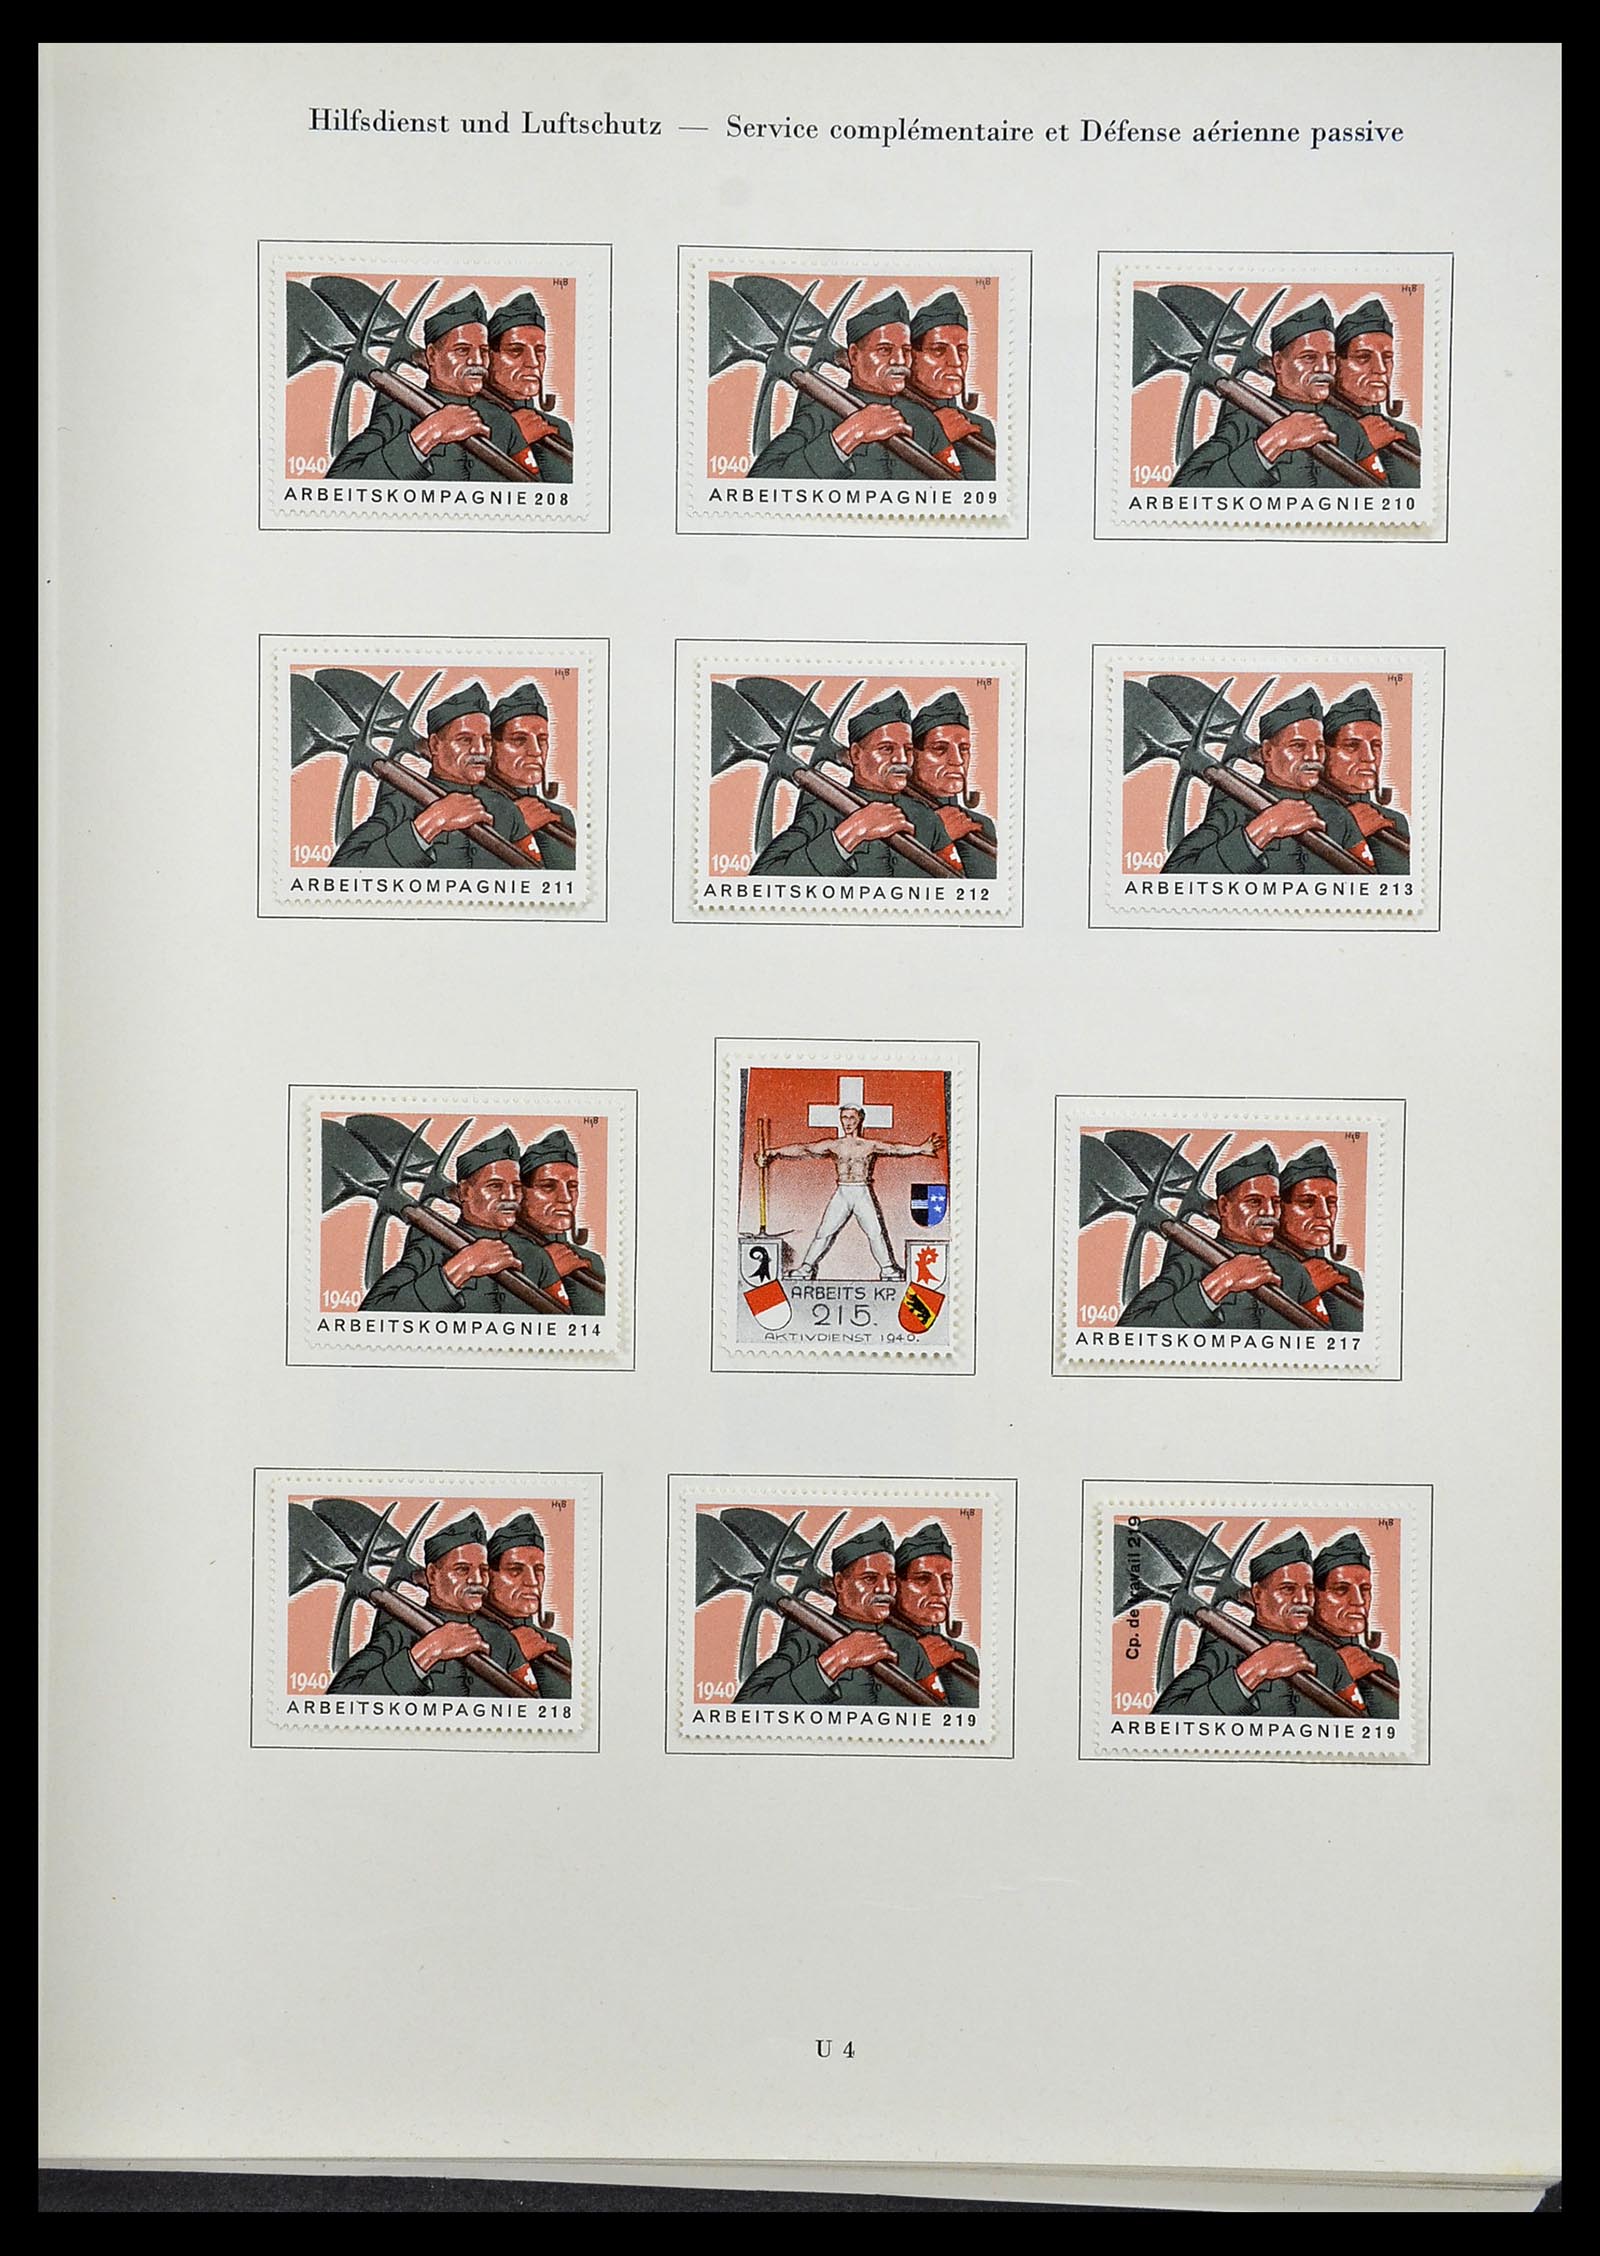 34234 319 - Stamp collection 34234 Switzerland soldier stamps 1939-1945.